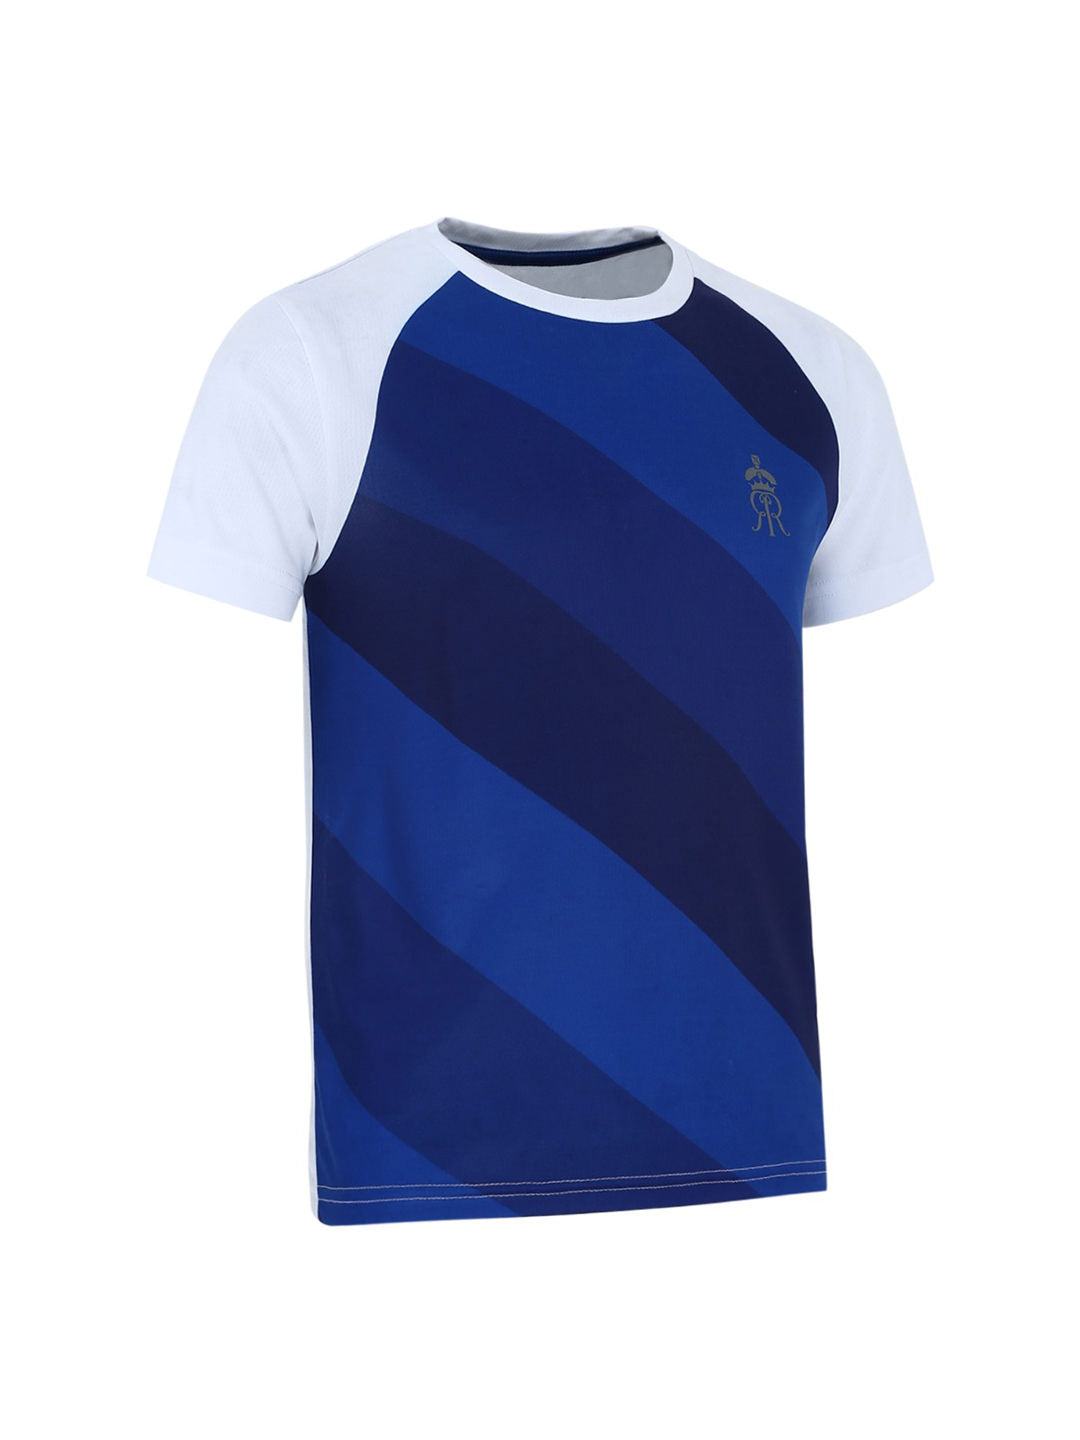 Alcis Boys Rajasthan Royals Blue Striped Round Neck T-shirt